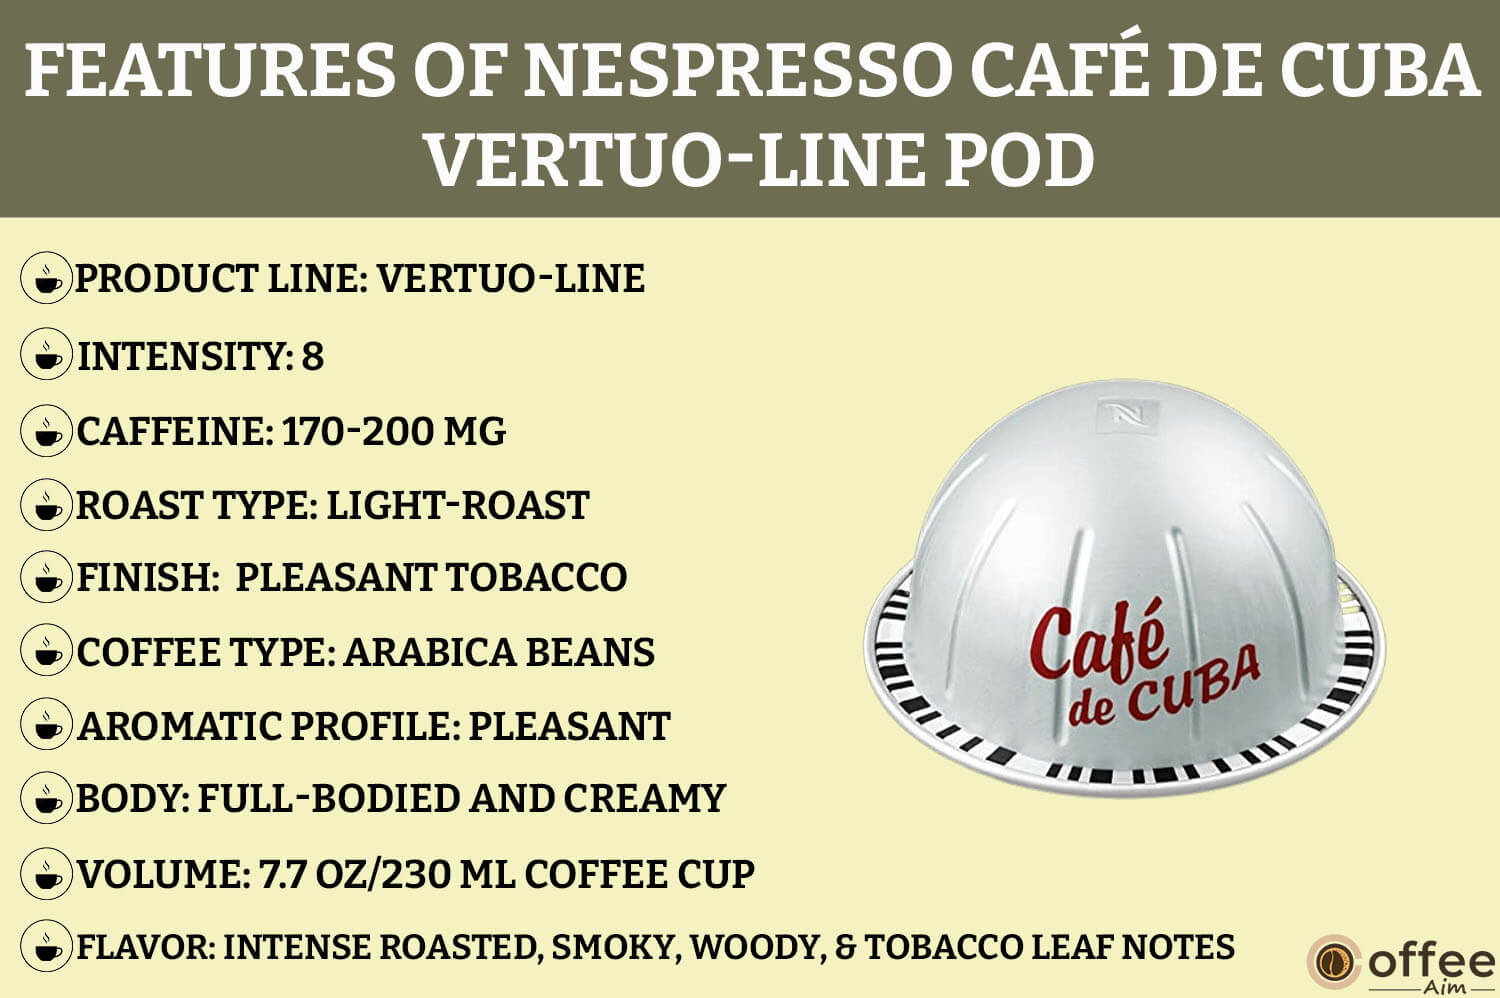 The image highlights Nespresso Café de Cuba VertuoLine Pod features for our review article.




